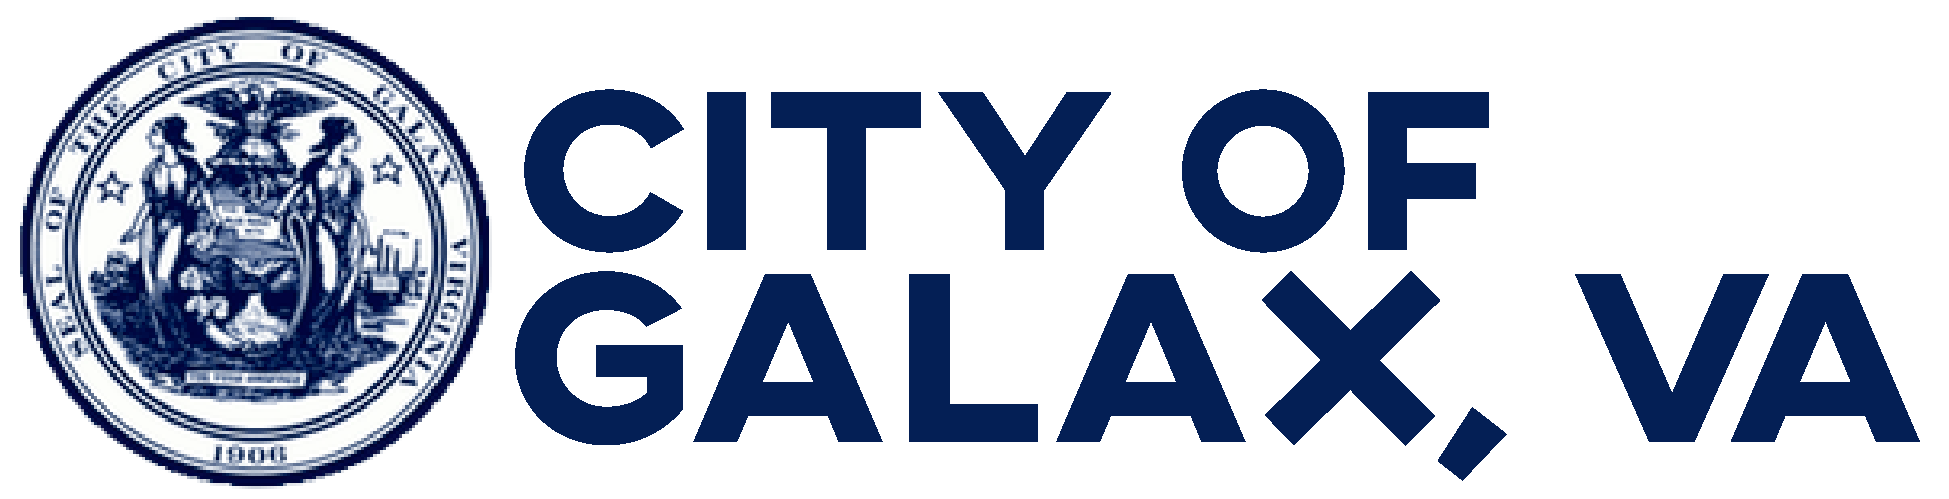 City of Galax Web Logo 02